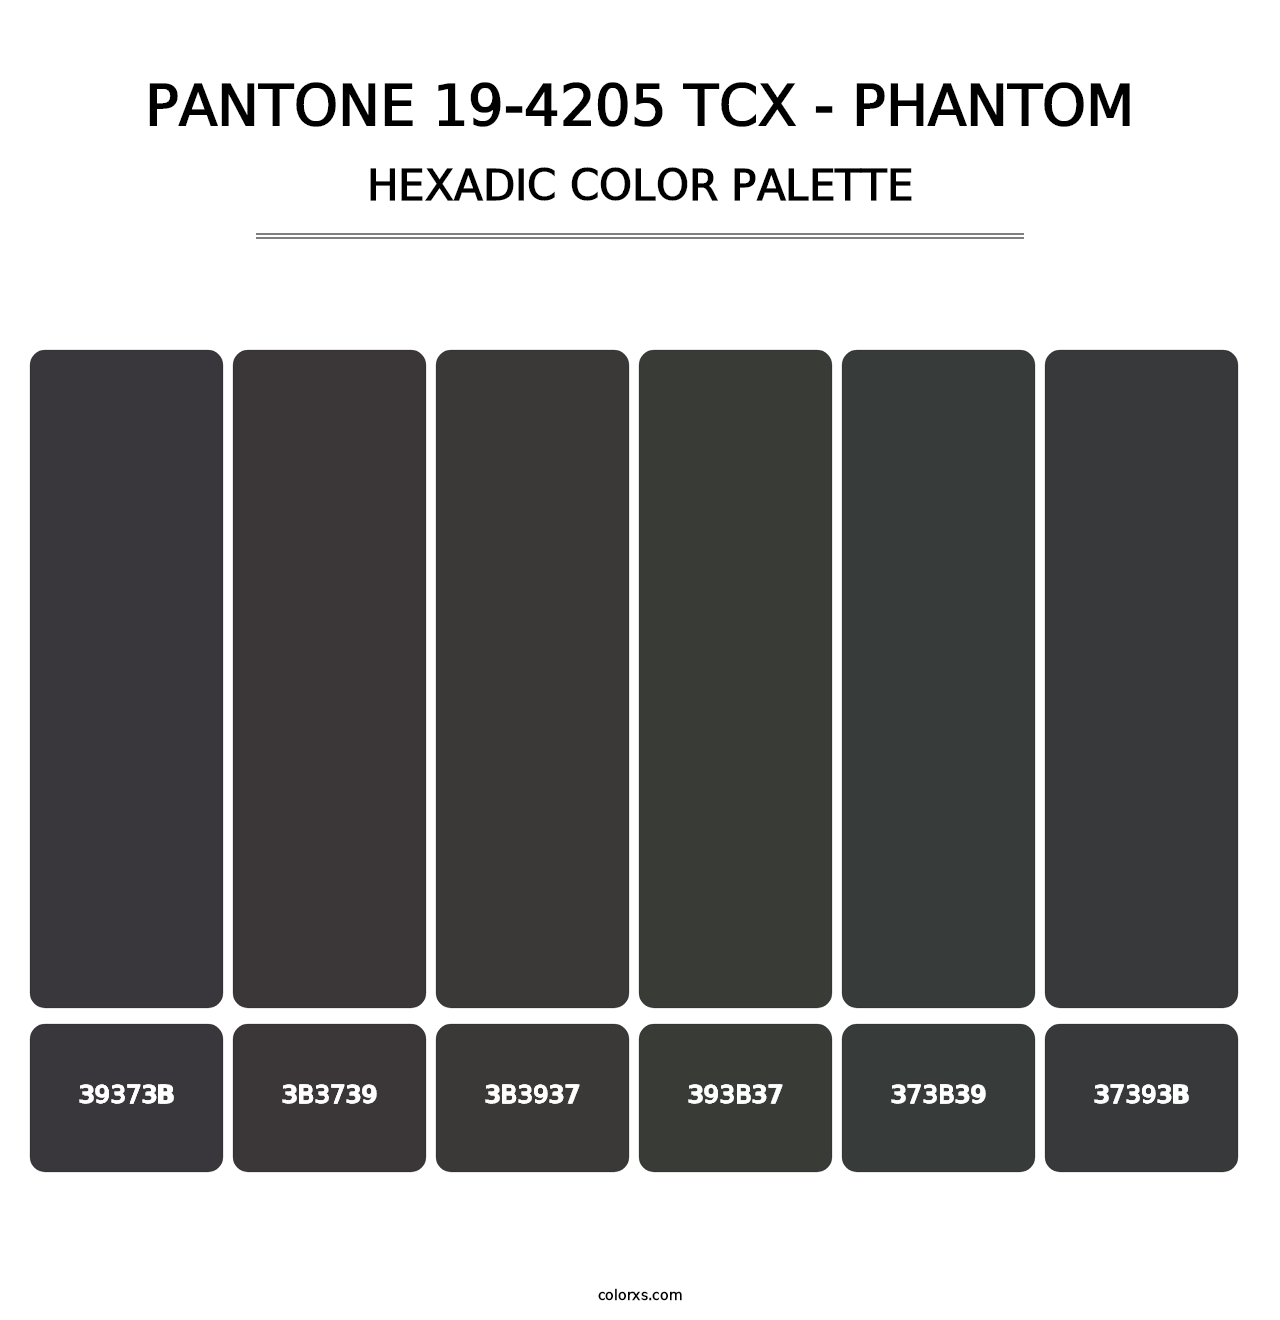 PANTONE 19-4205 TCX - Phantom - Hexadic Color Palette